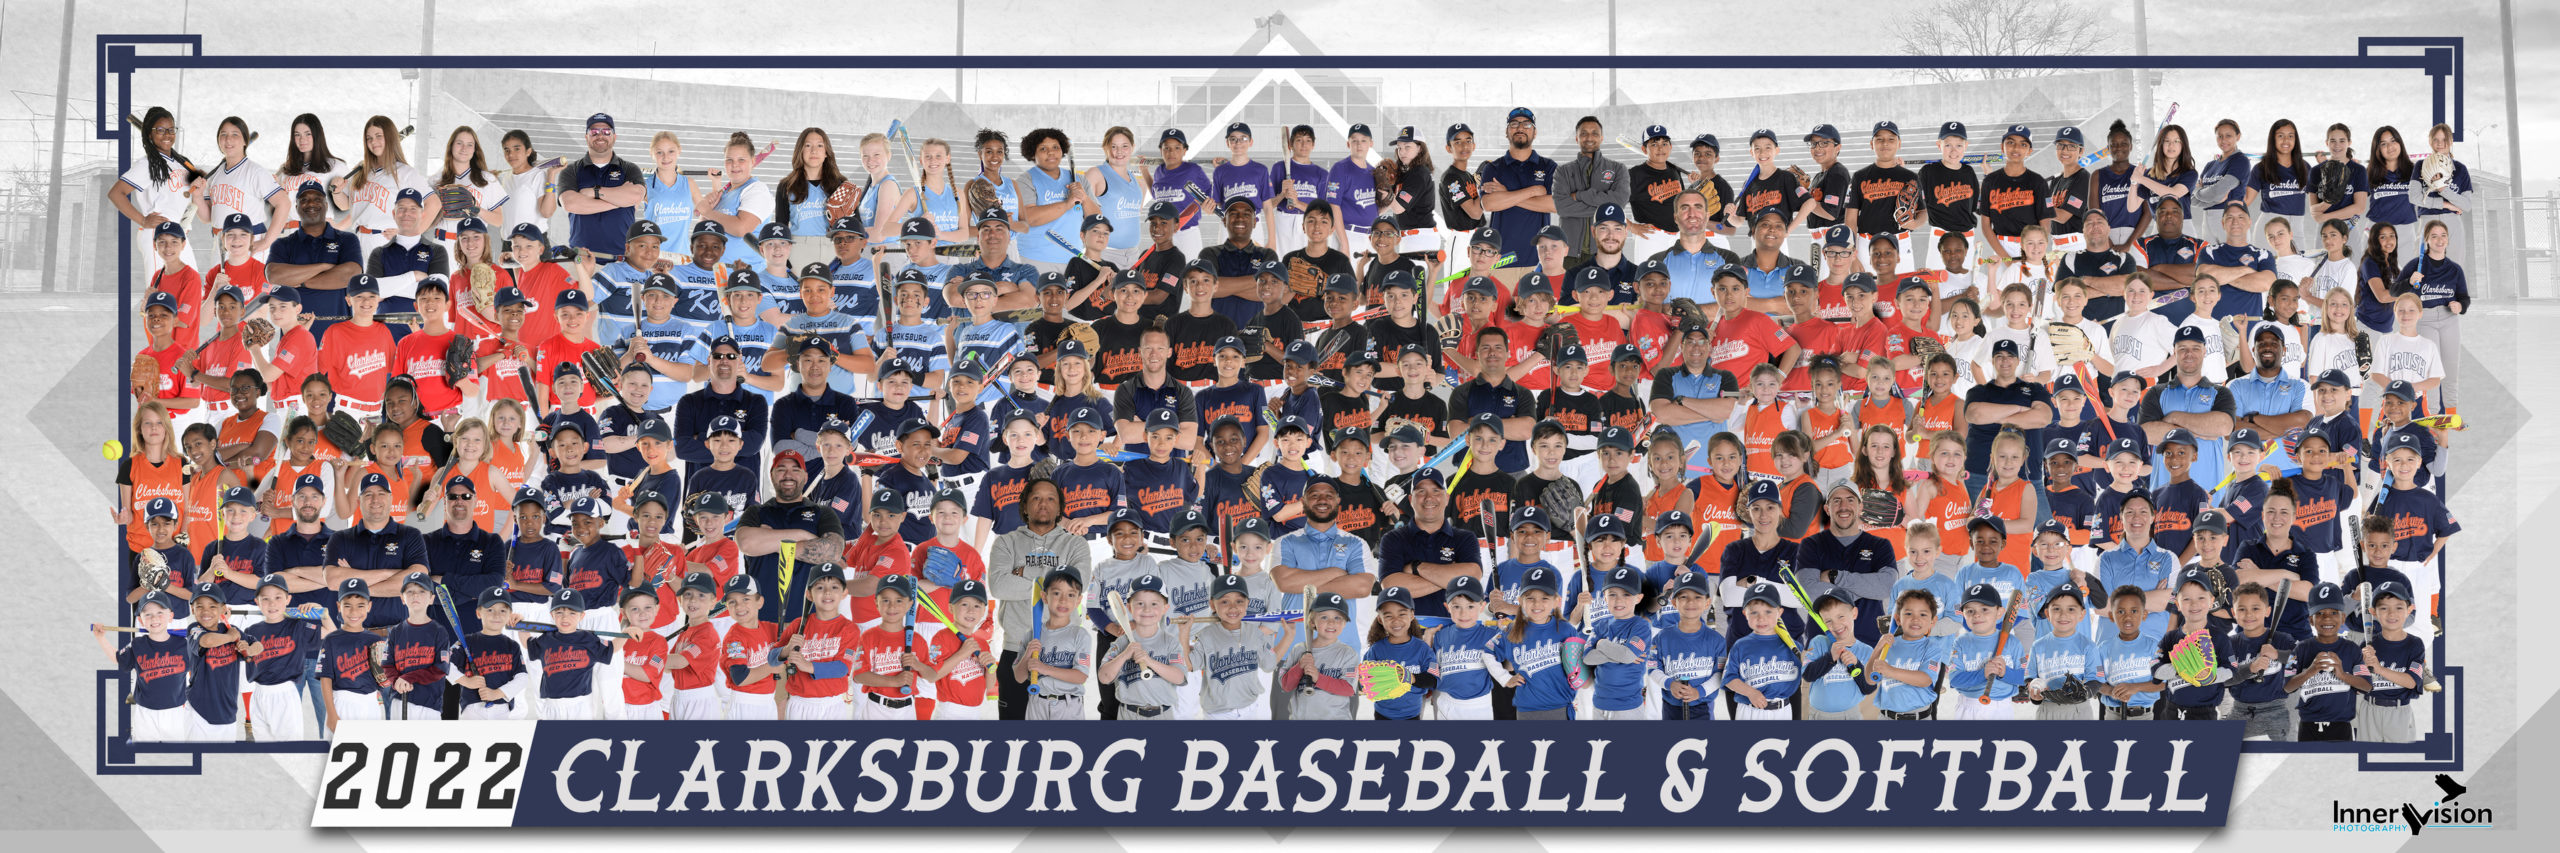 2022_Clarksburg_Baseball_1x3_Panramic_copy_50